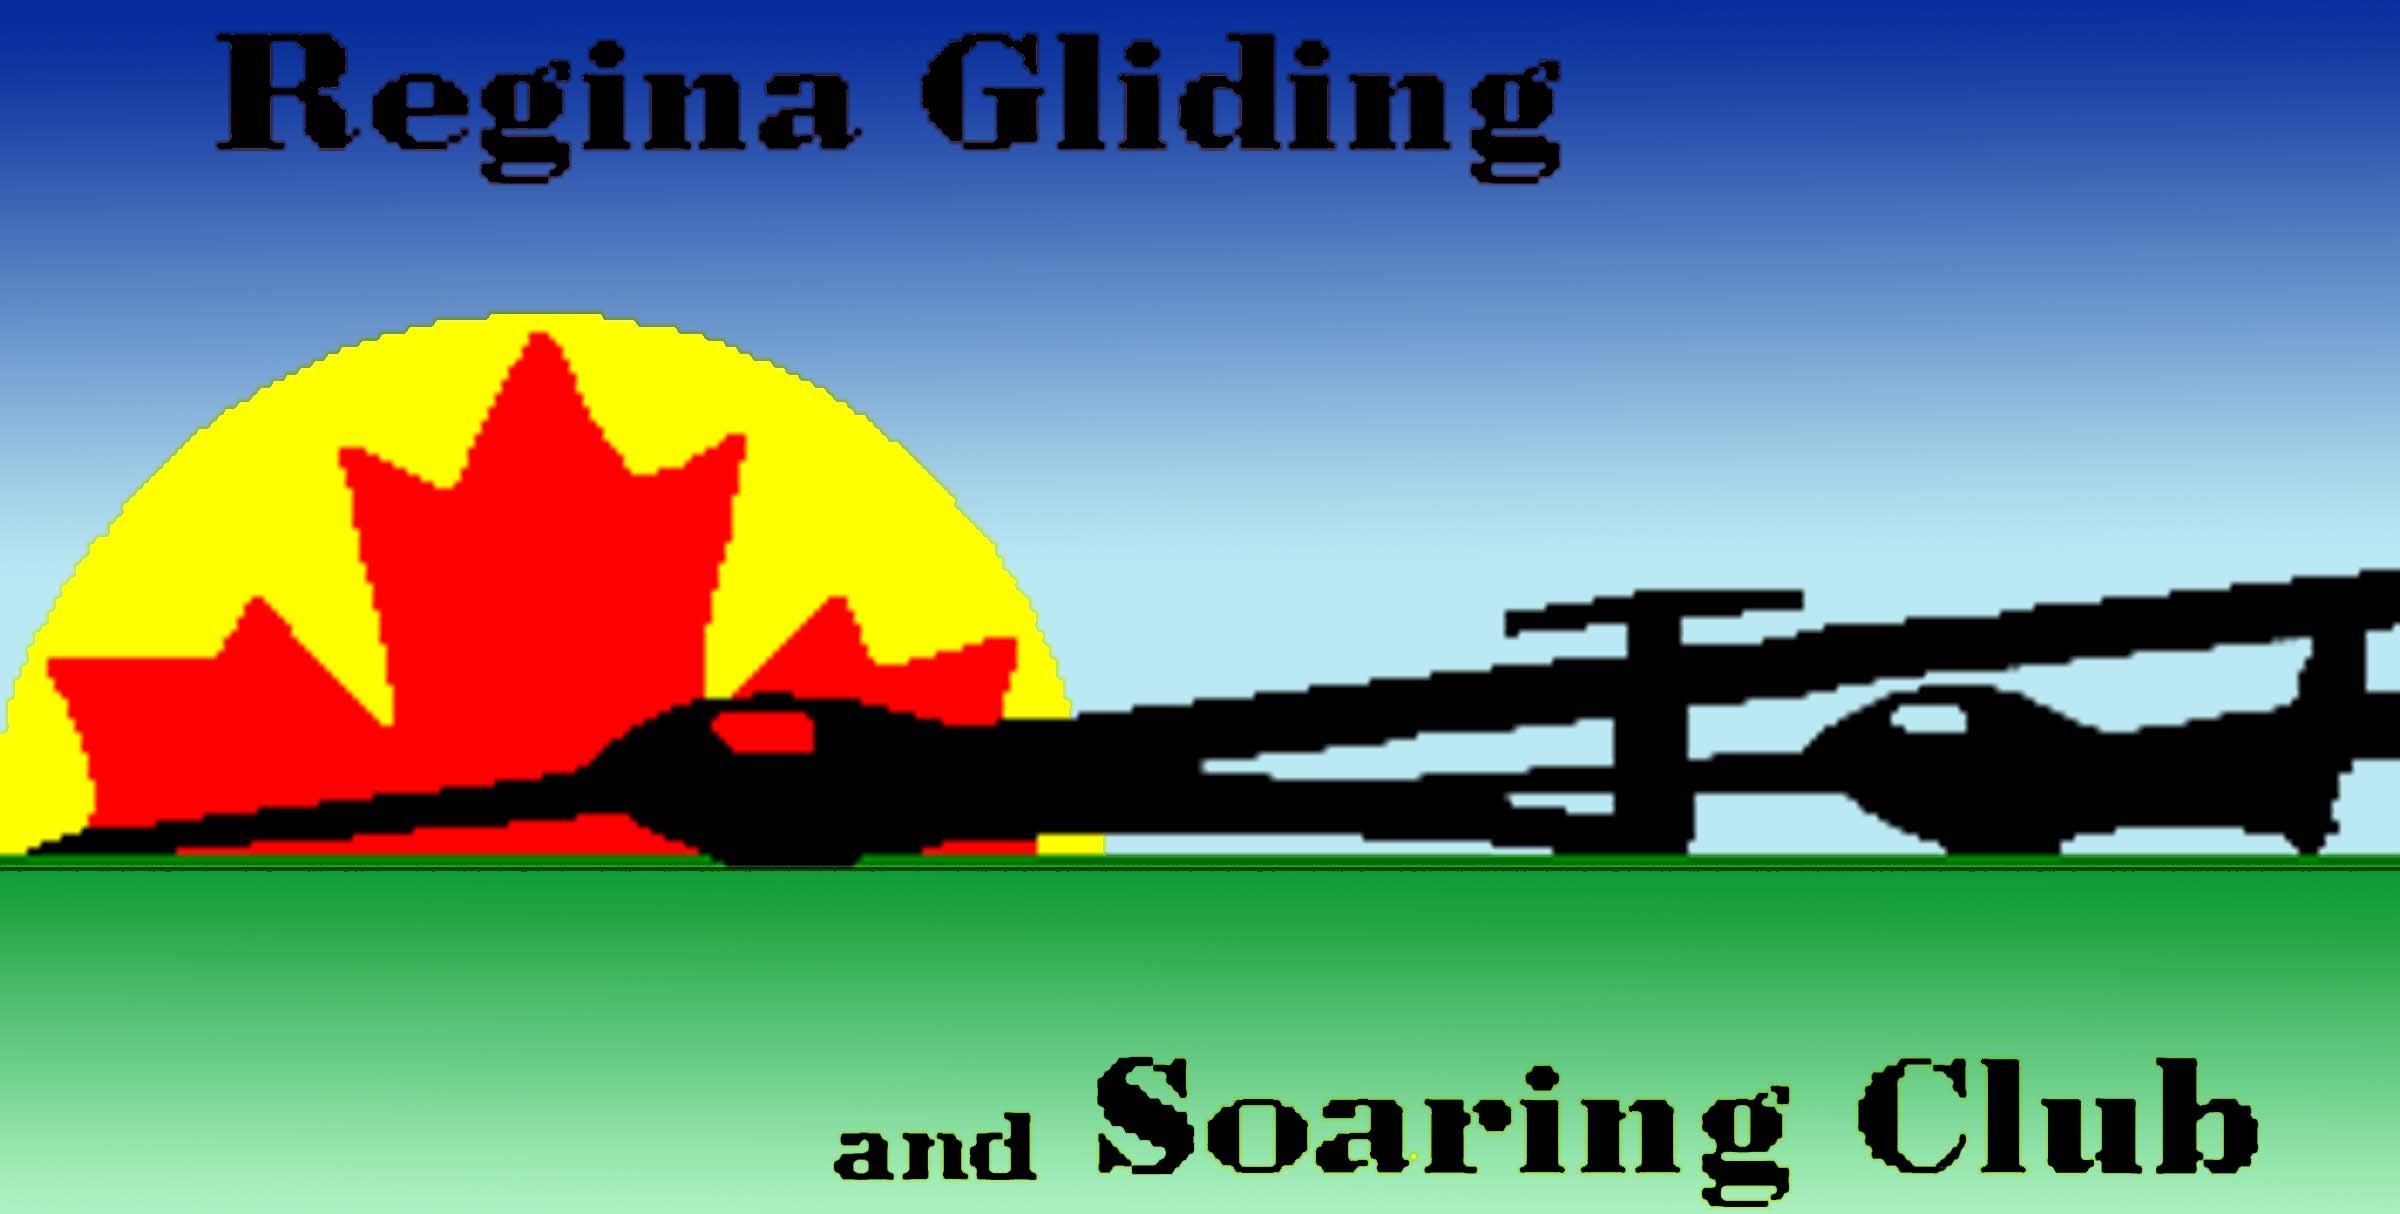 The Regina Gliding and Soaring Club